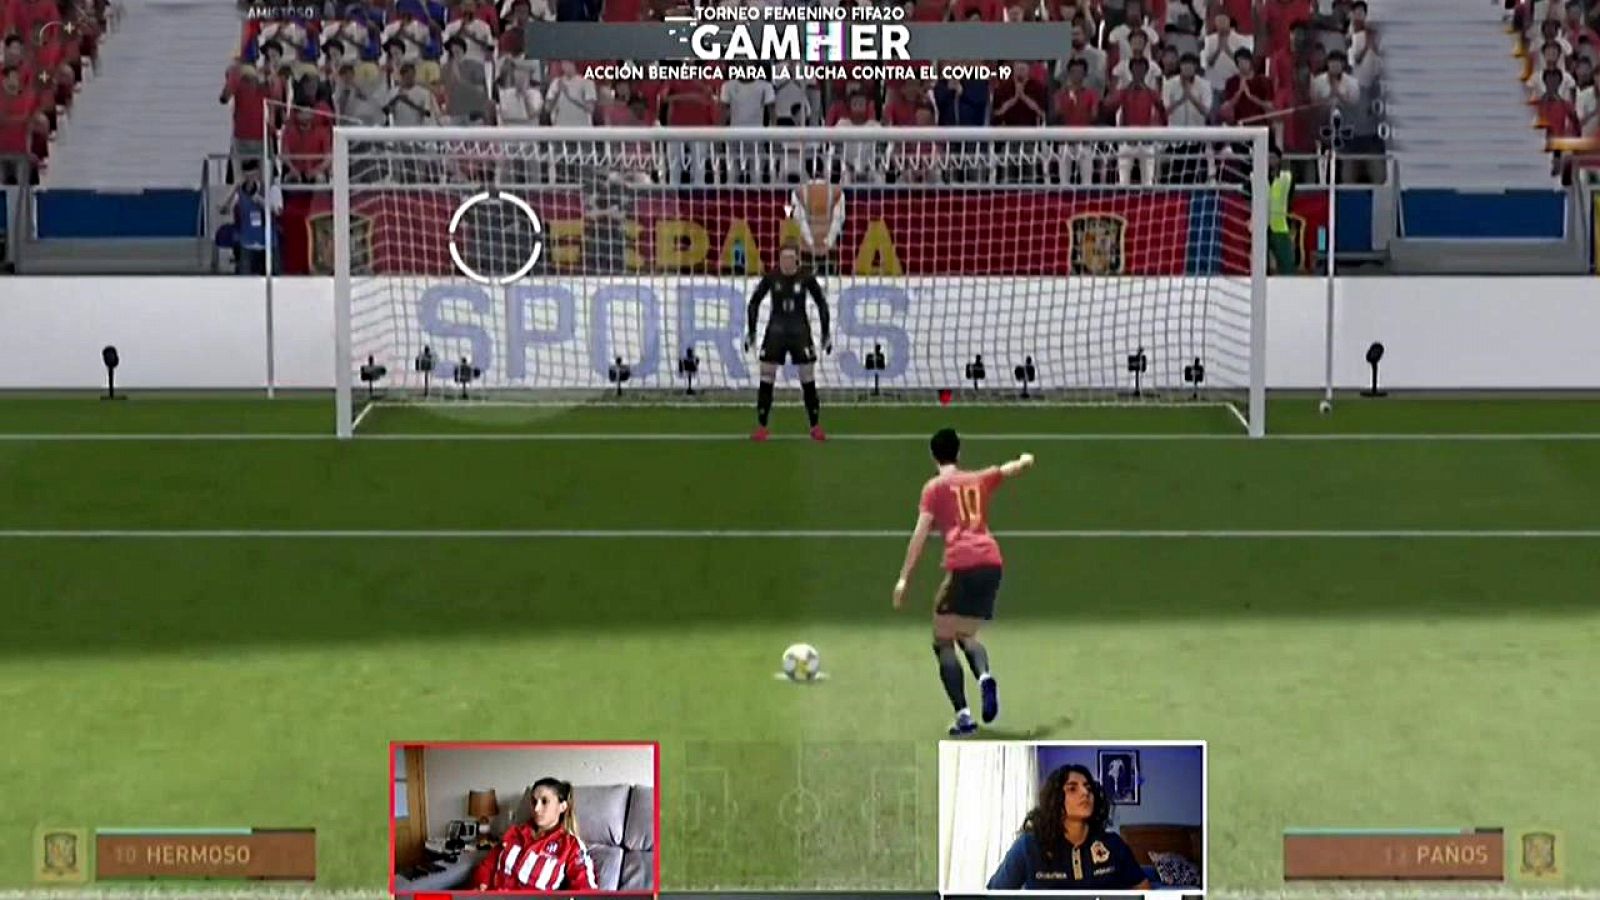 e-games - Gamher Fútbol Torneo Femenino FIFA 20 QF 1 y QF 2 - RTVE.es